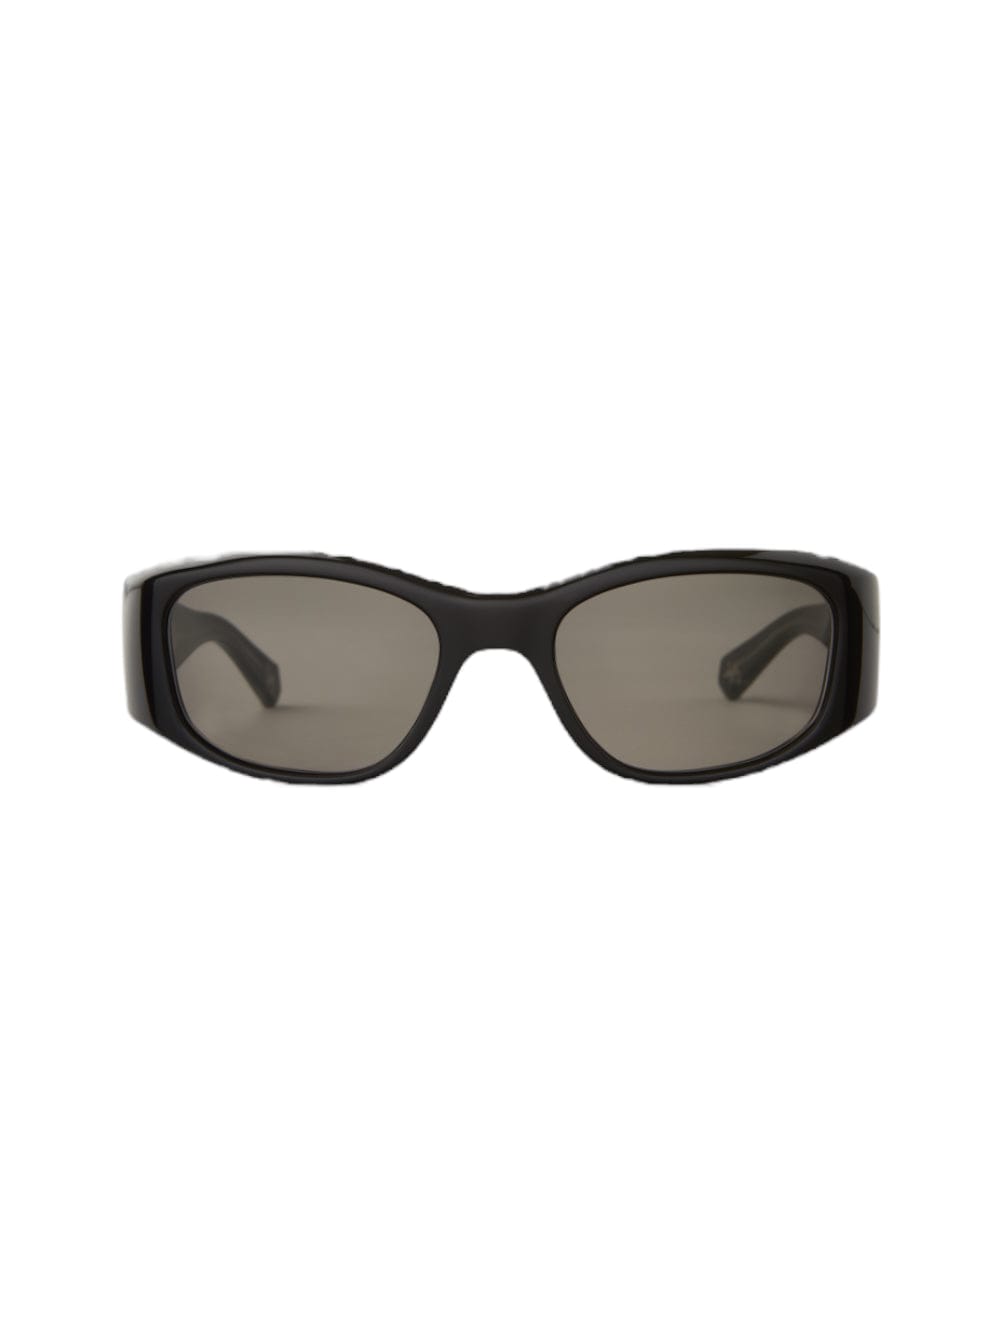 Aloha - Black Sunglasses